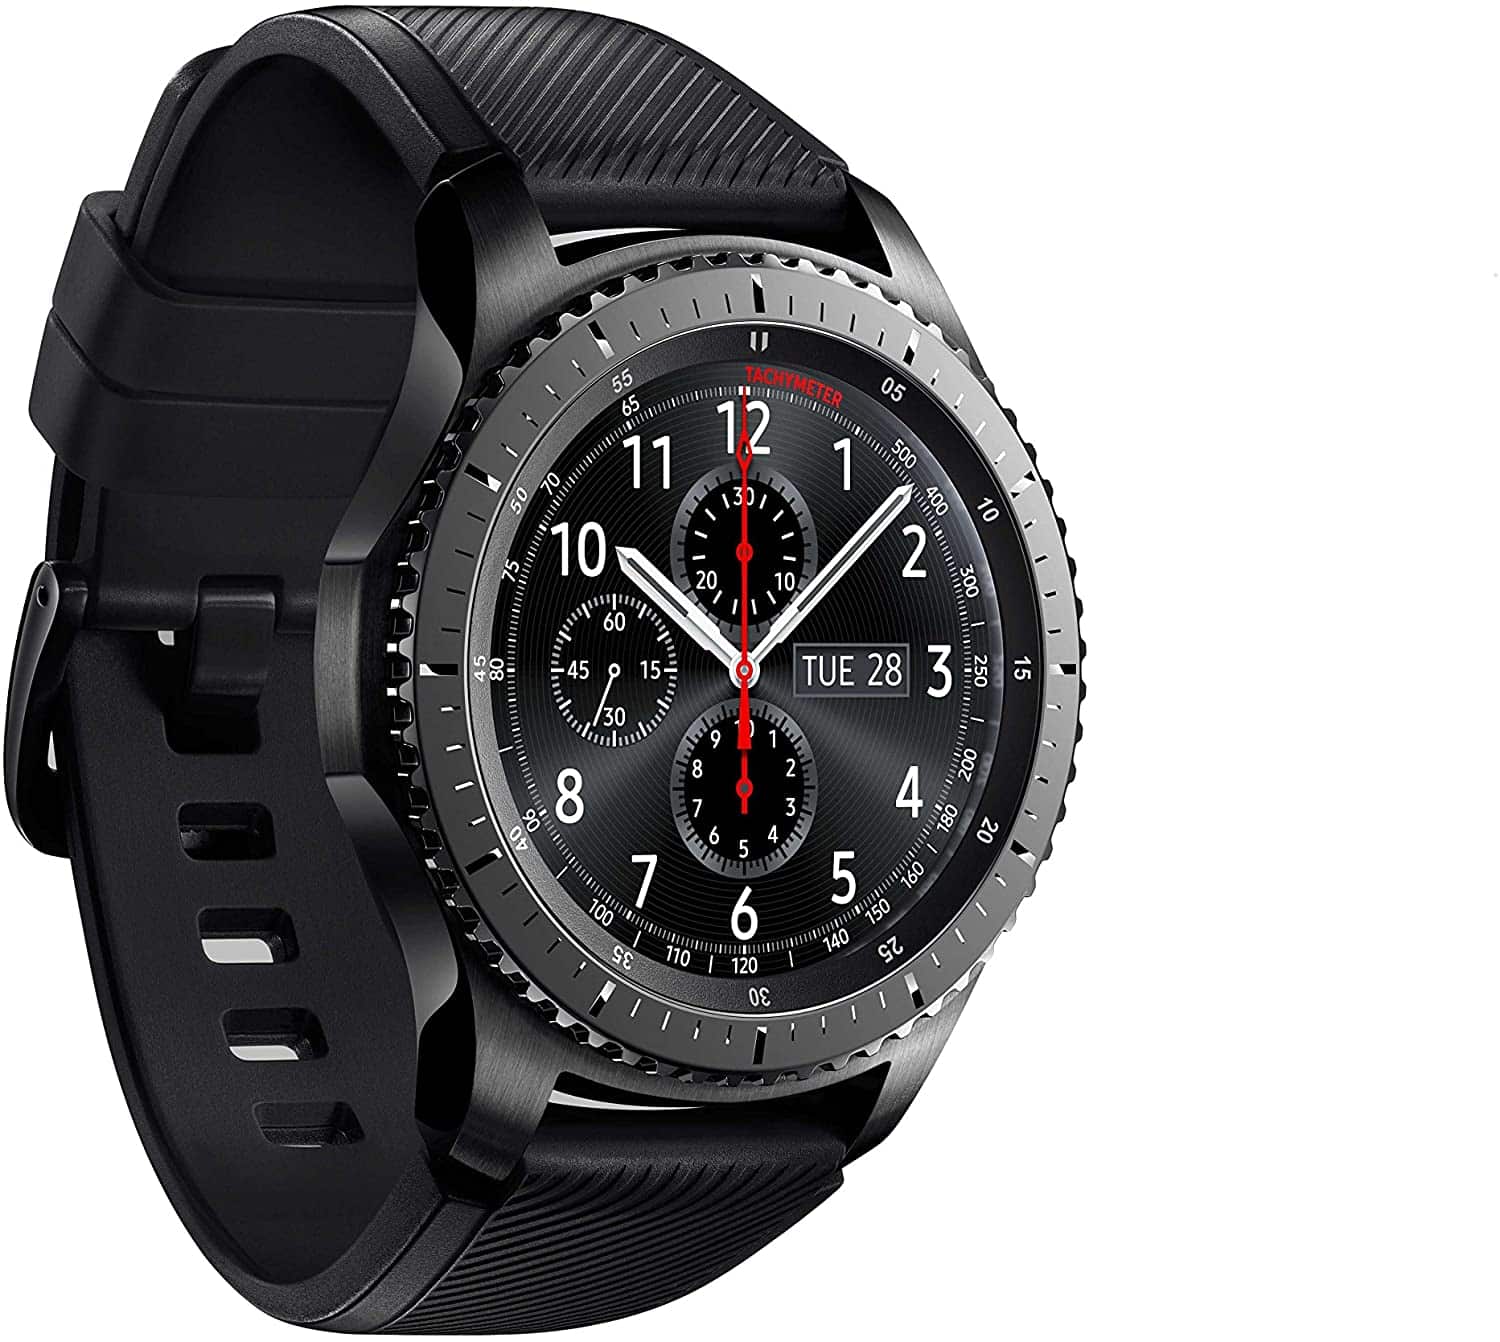 Samsung Gear S3 Frontier Smartwatch 1,3